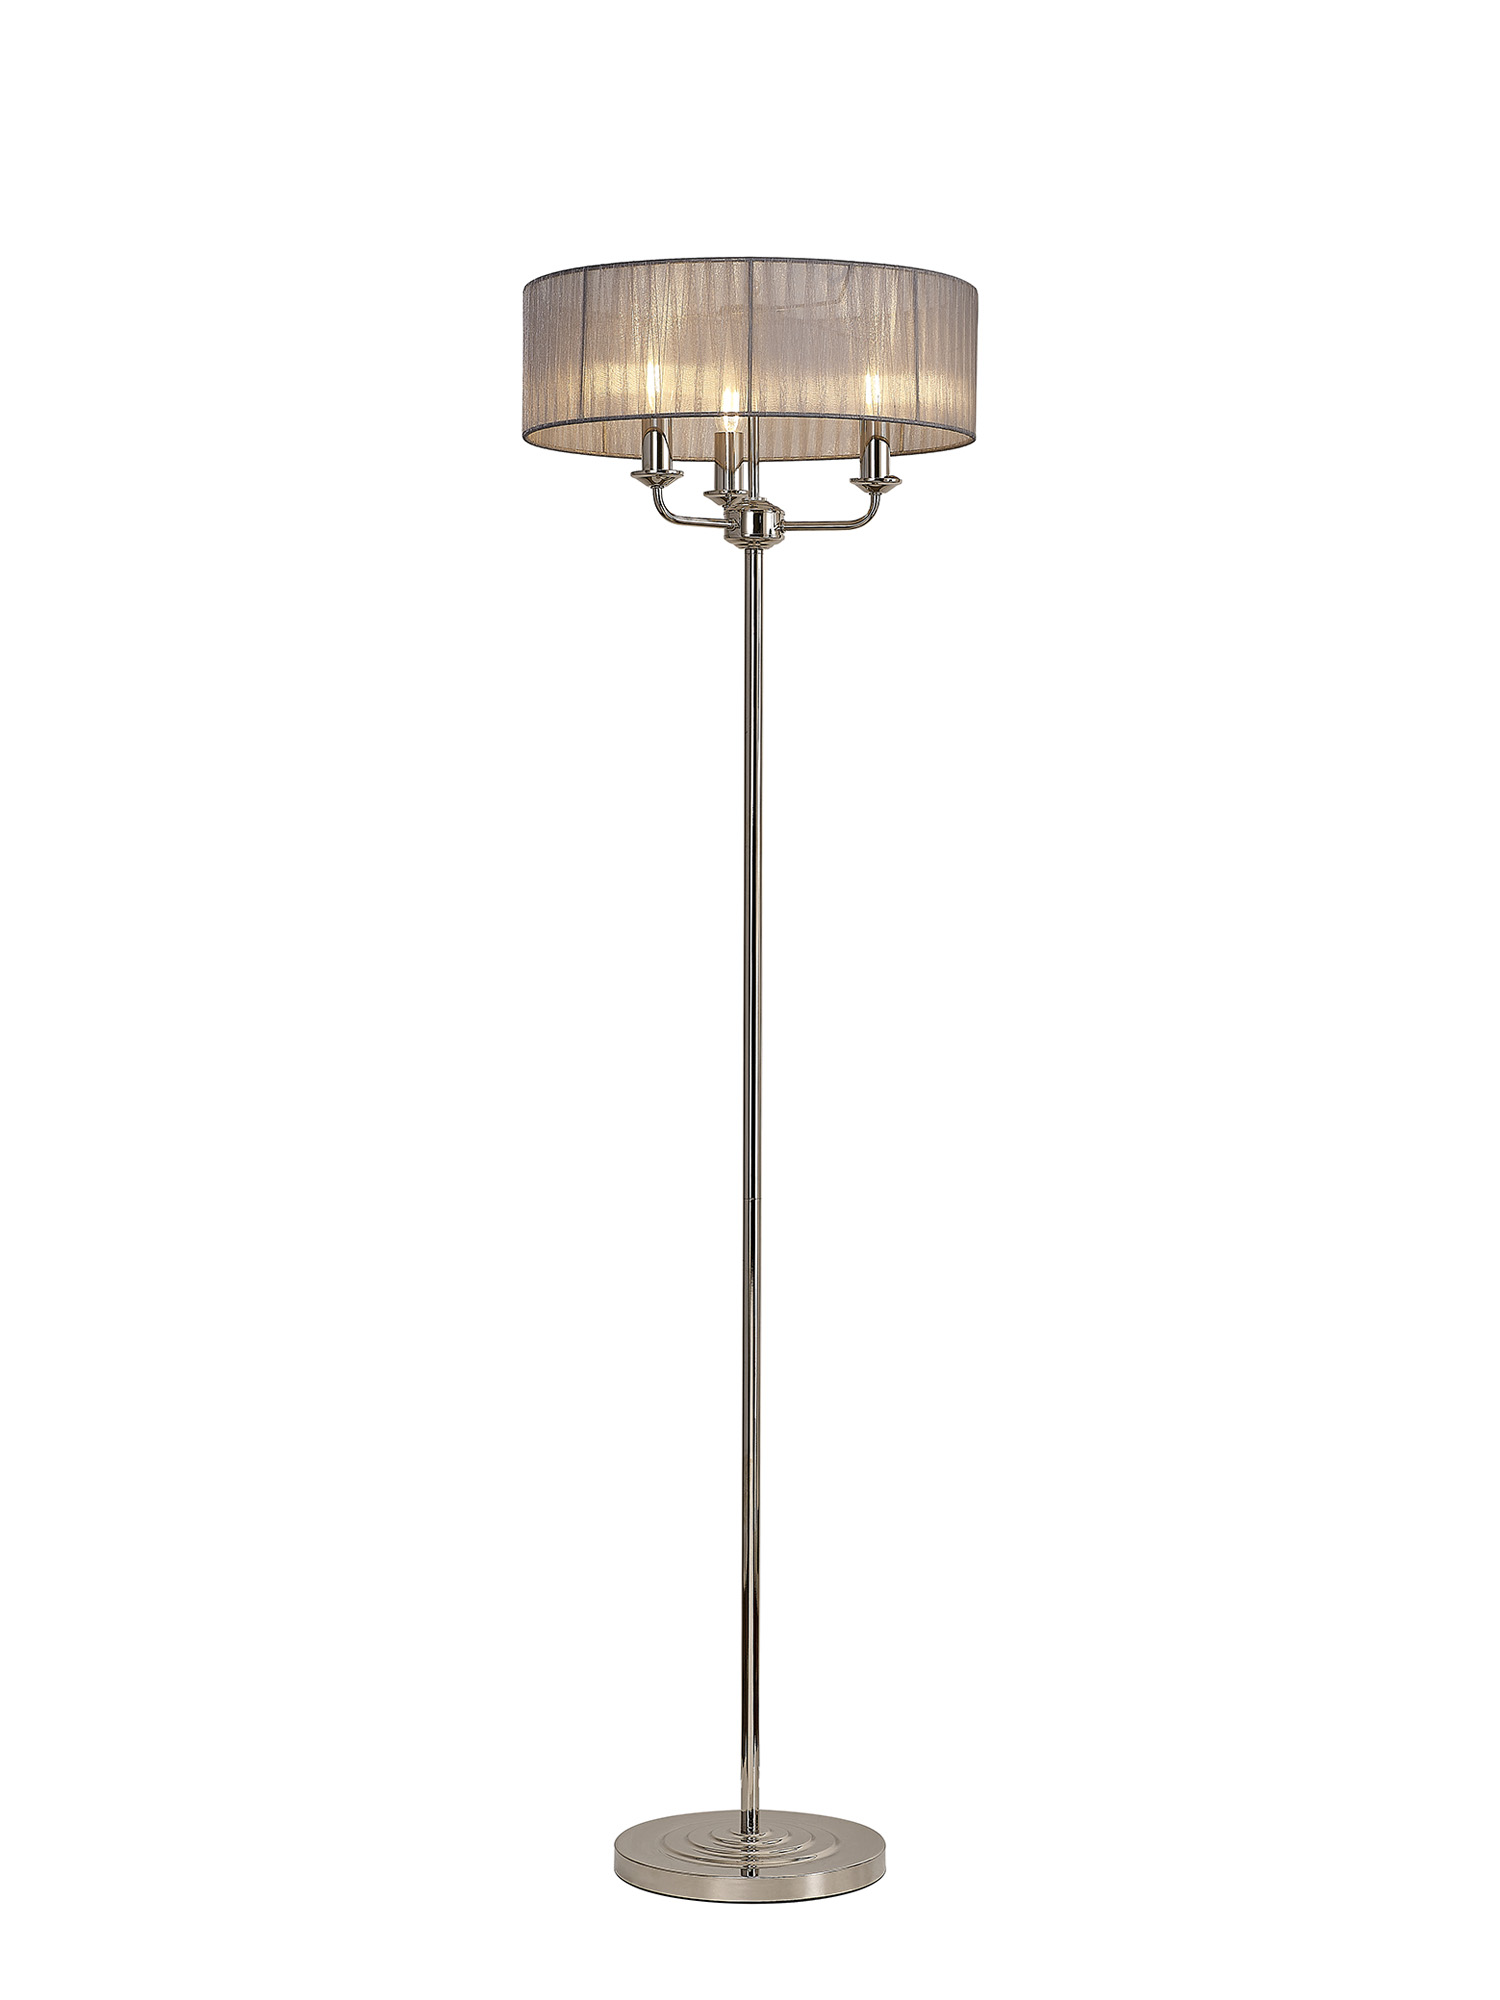 DK0890  Banyan 45cm 3 Light Floor Lamp Polished Nickel, Grey